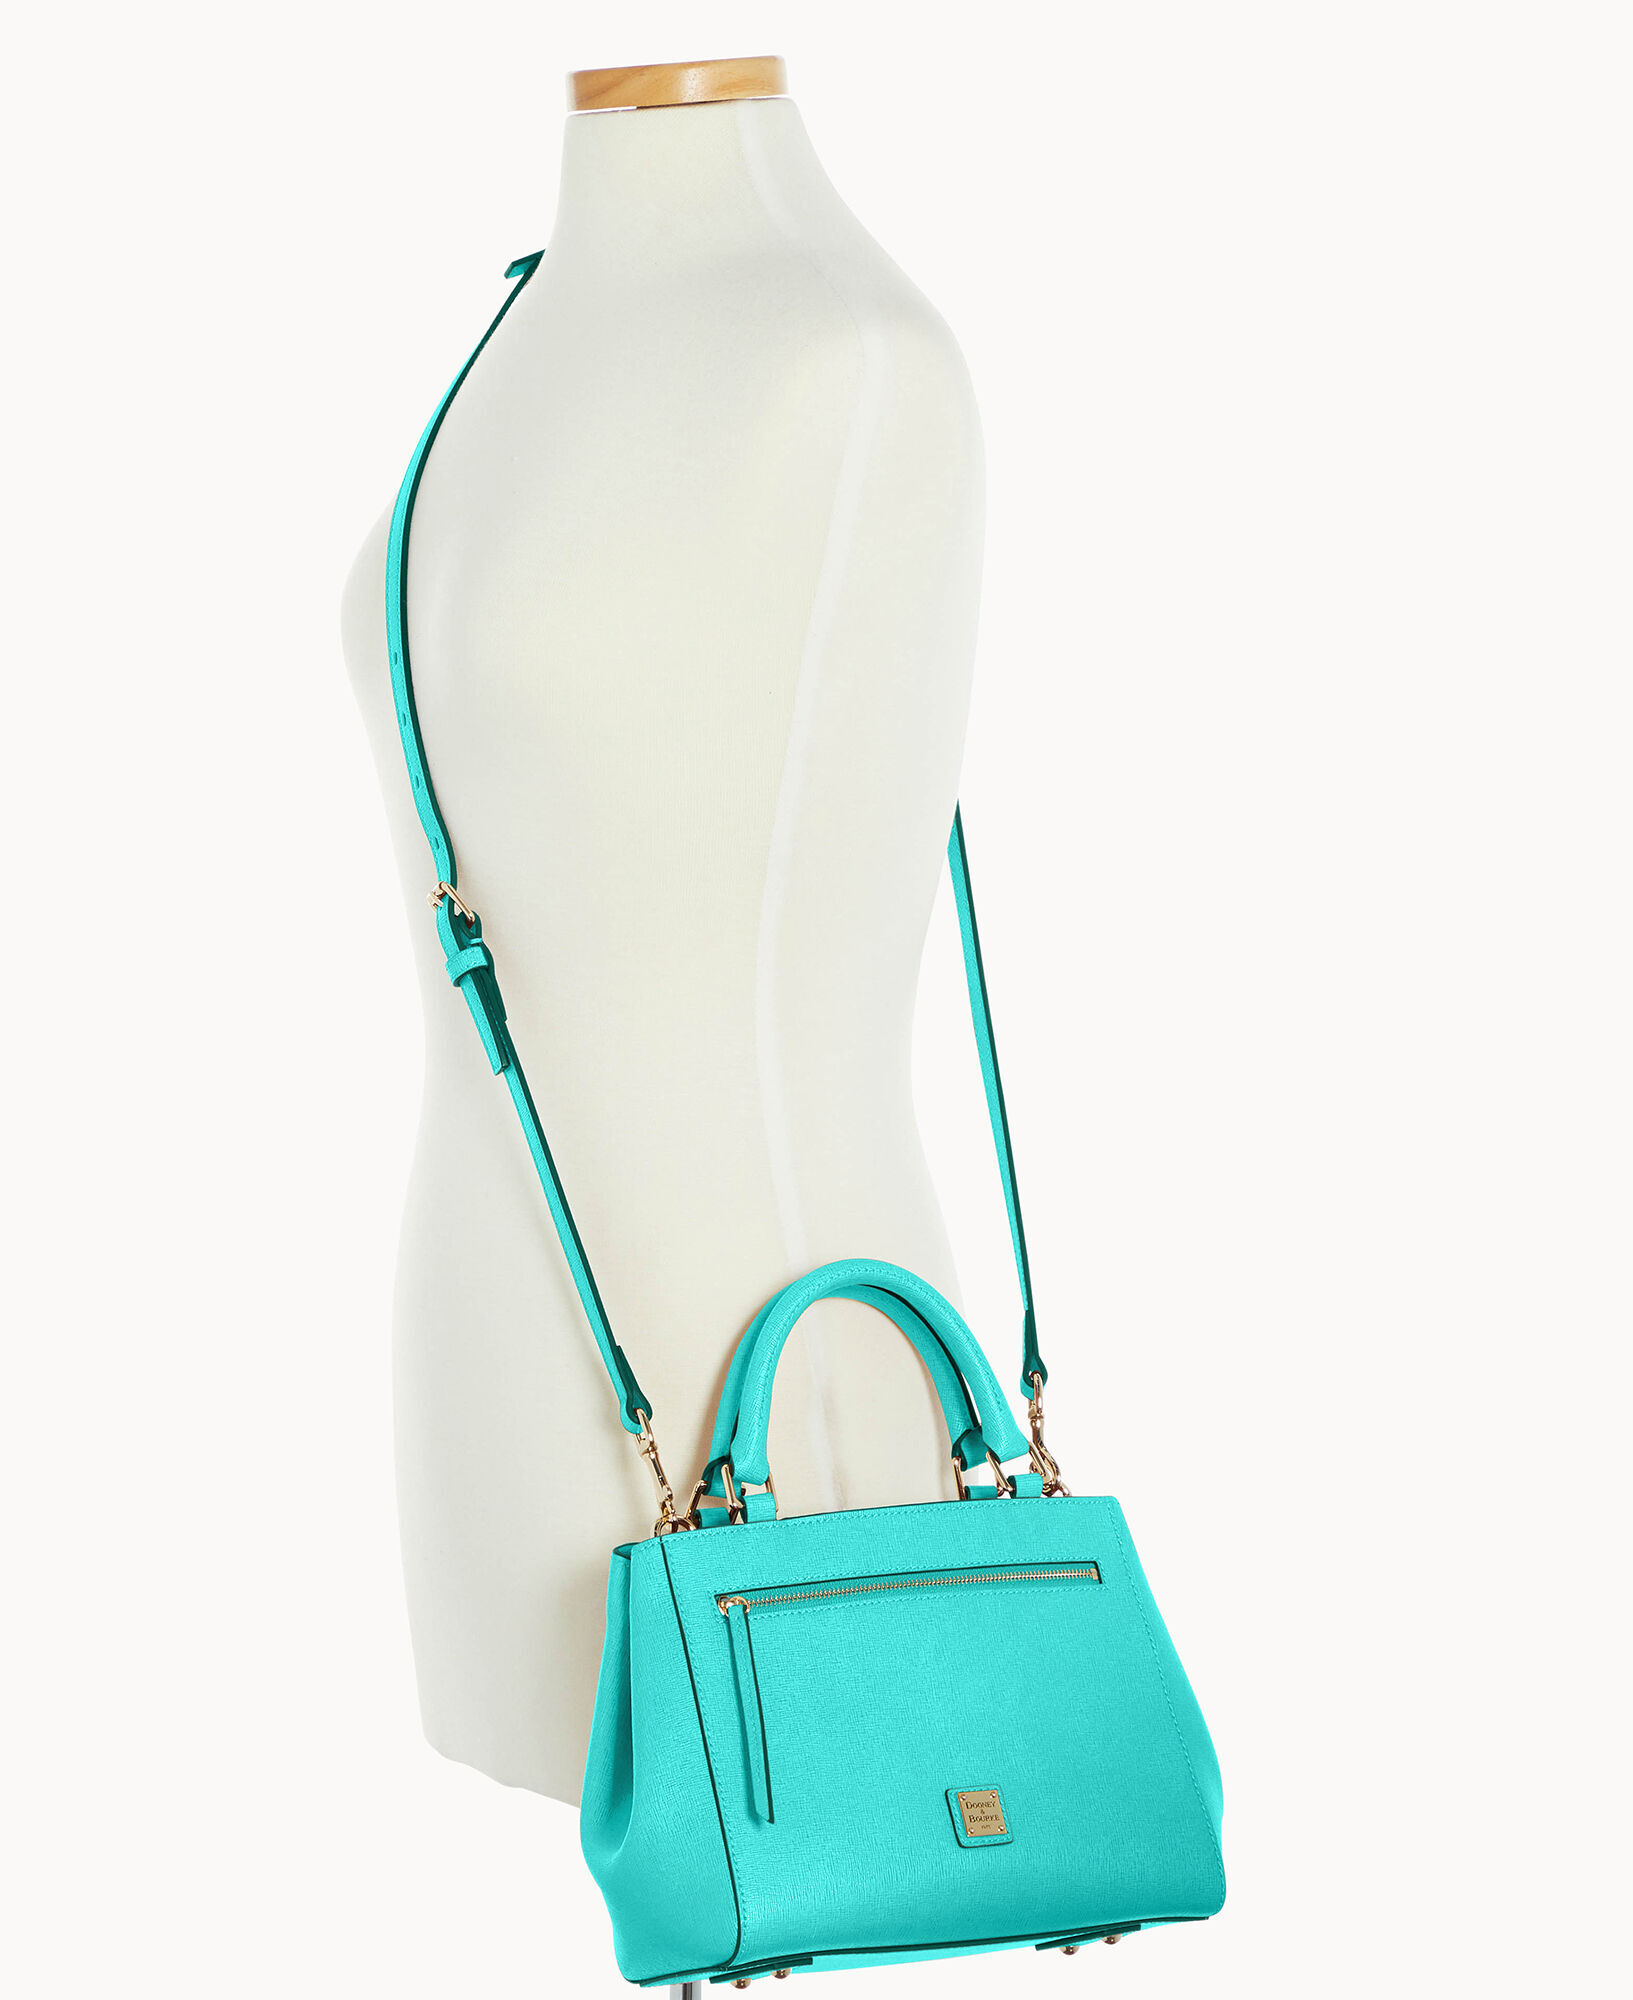 Dooney & Bourke Handbag, Saffiano Small Zip Crossbody - Amber